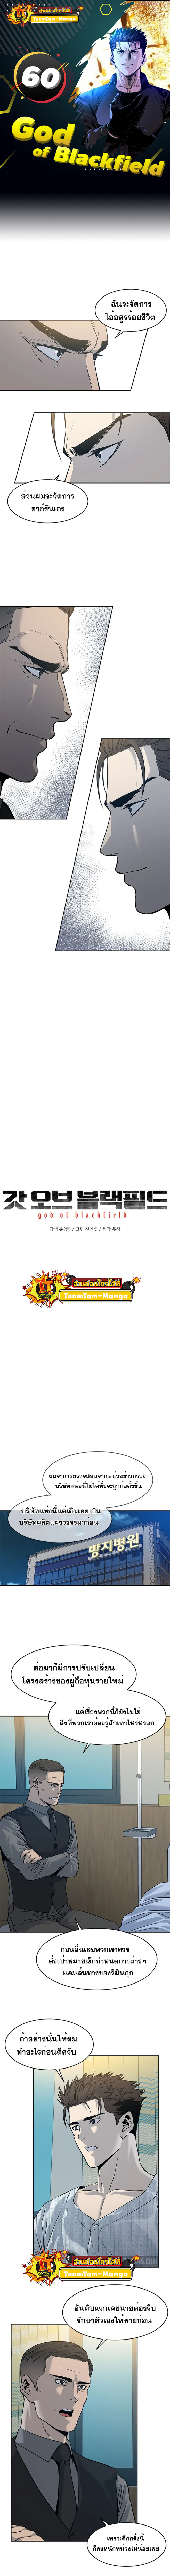 God of Blackfield60 (1)